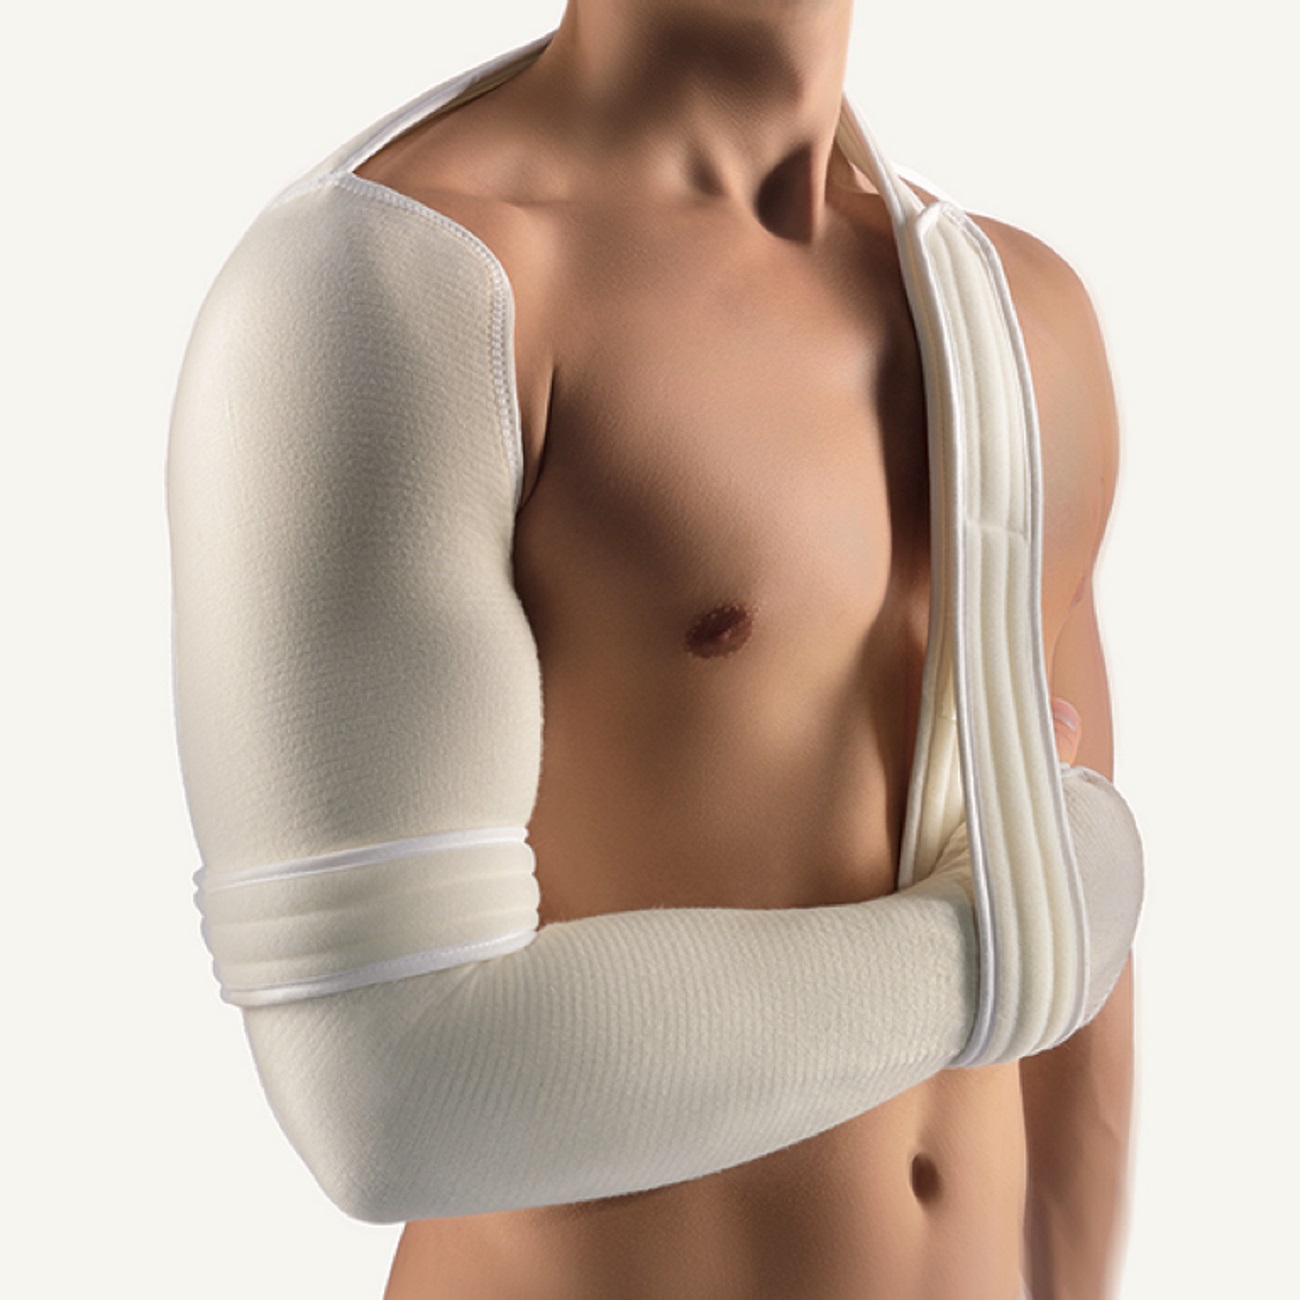 Schulter-Arm-Bandage OmoBasic nach Gilchrist geschlossene Form